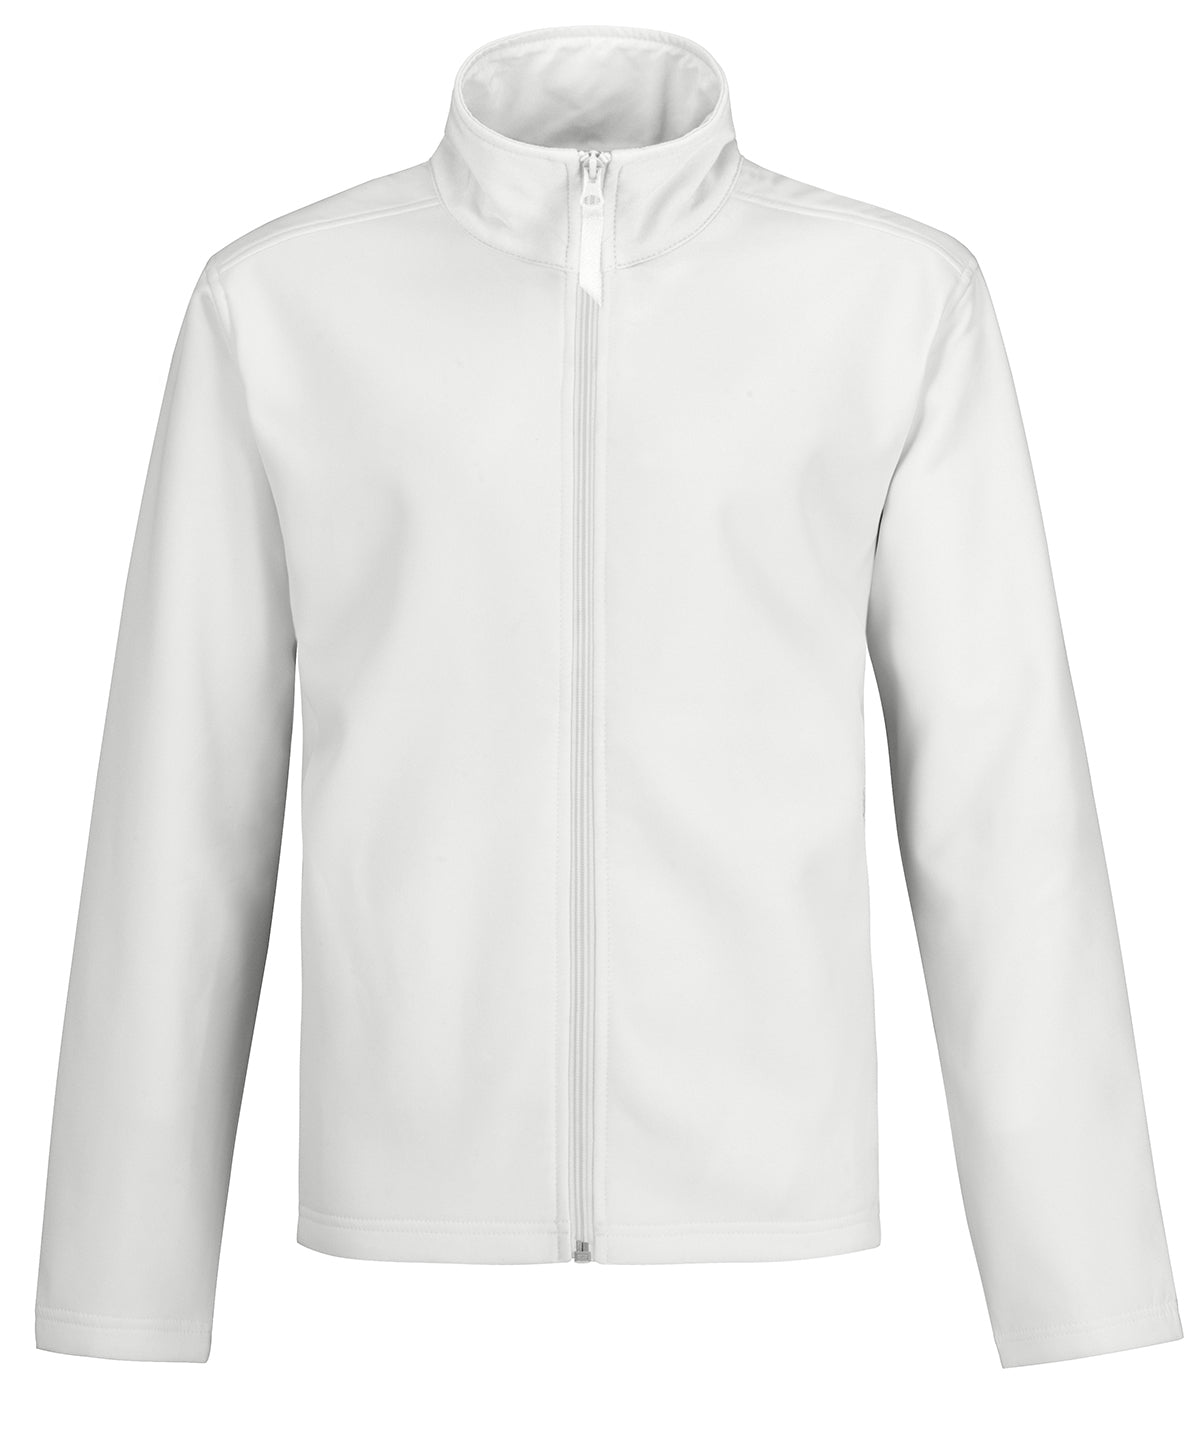 Personalised Jackets - Black B&C Collection B&C ID.701 Softshell jacket /men